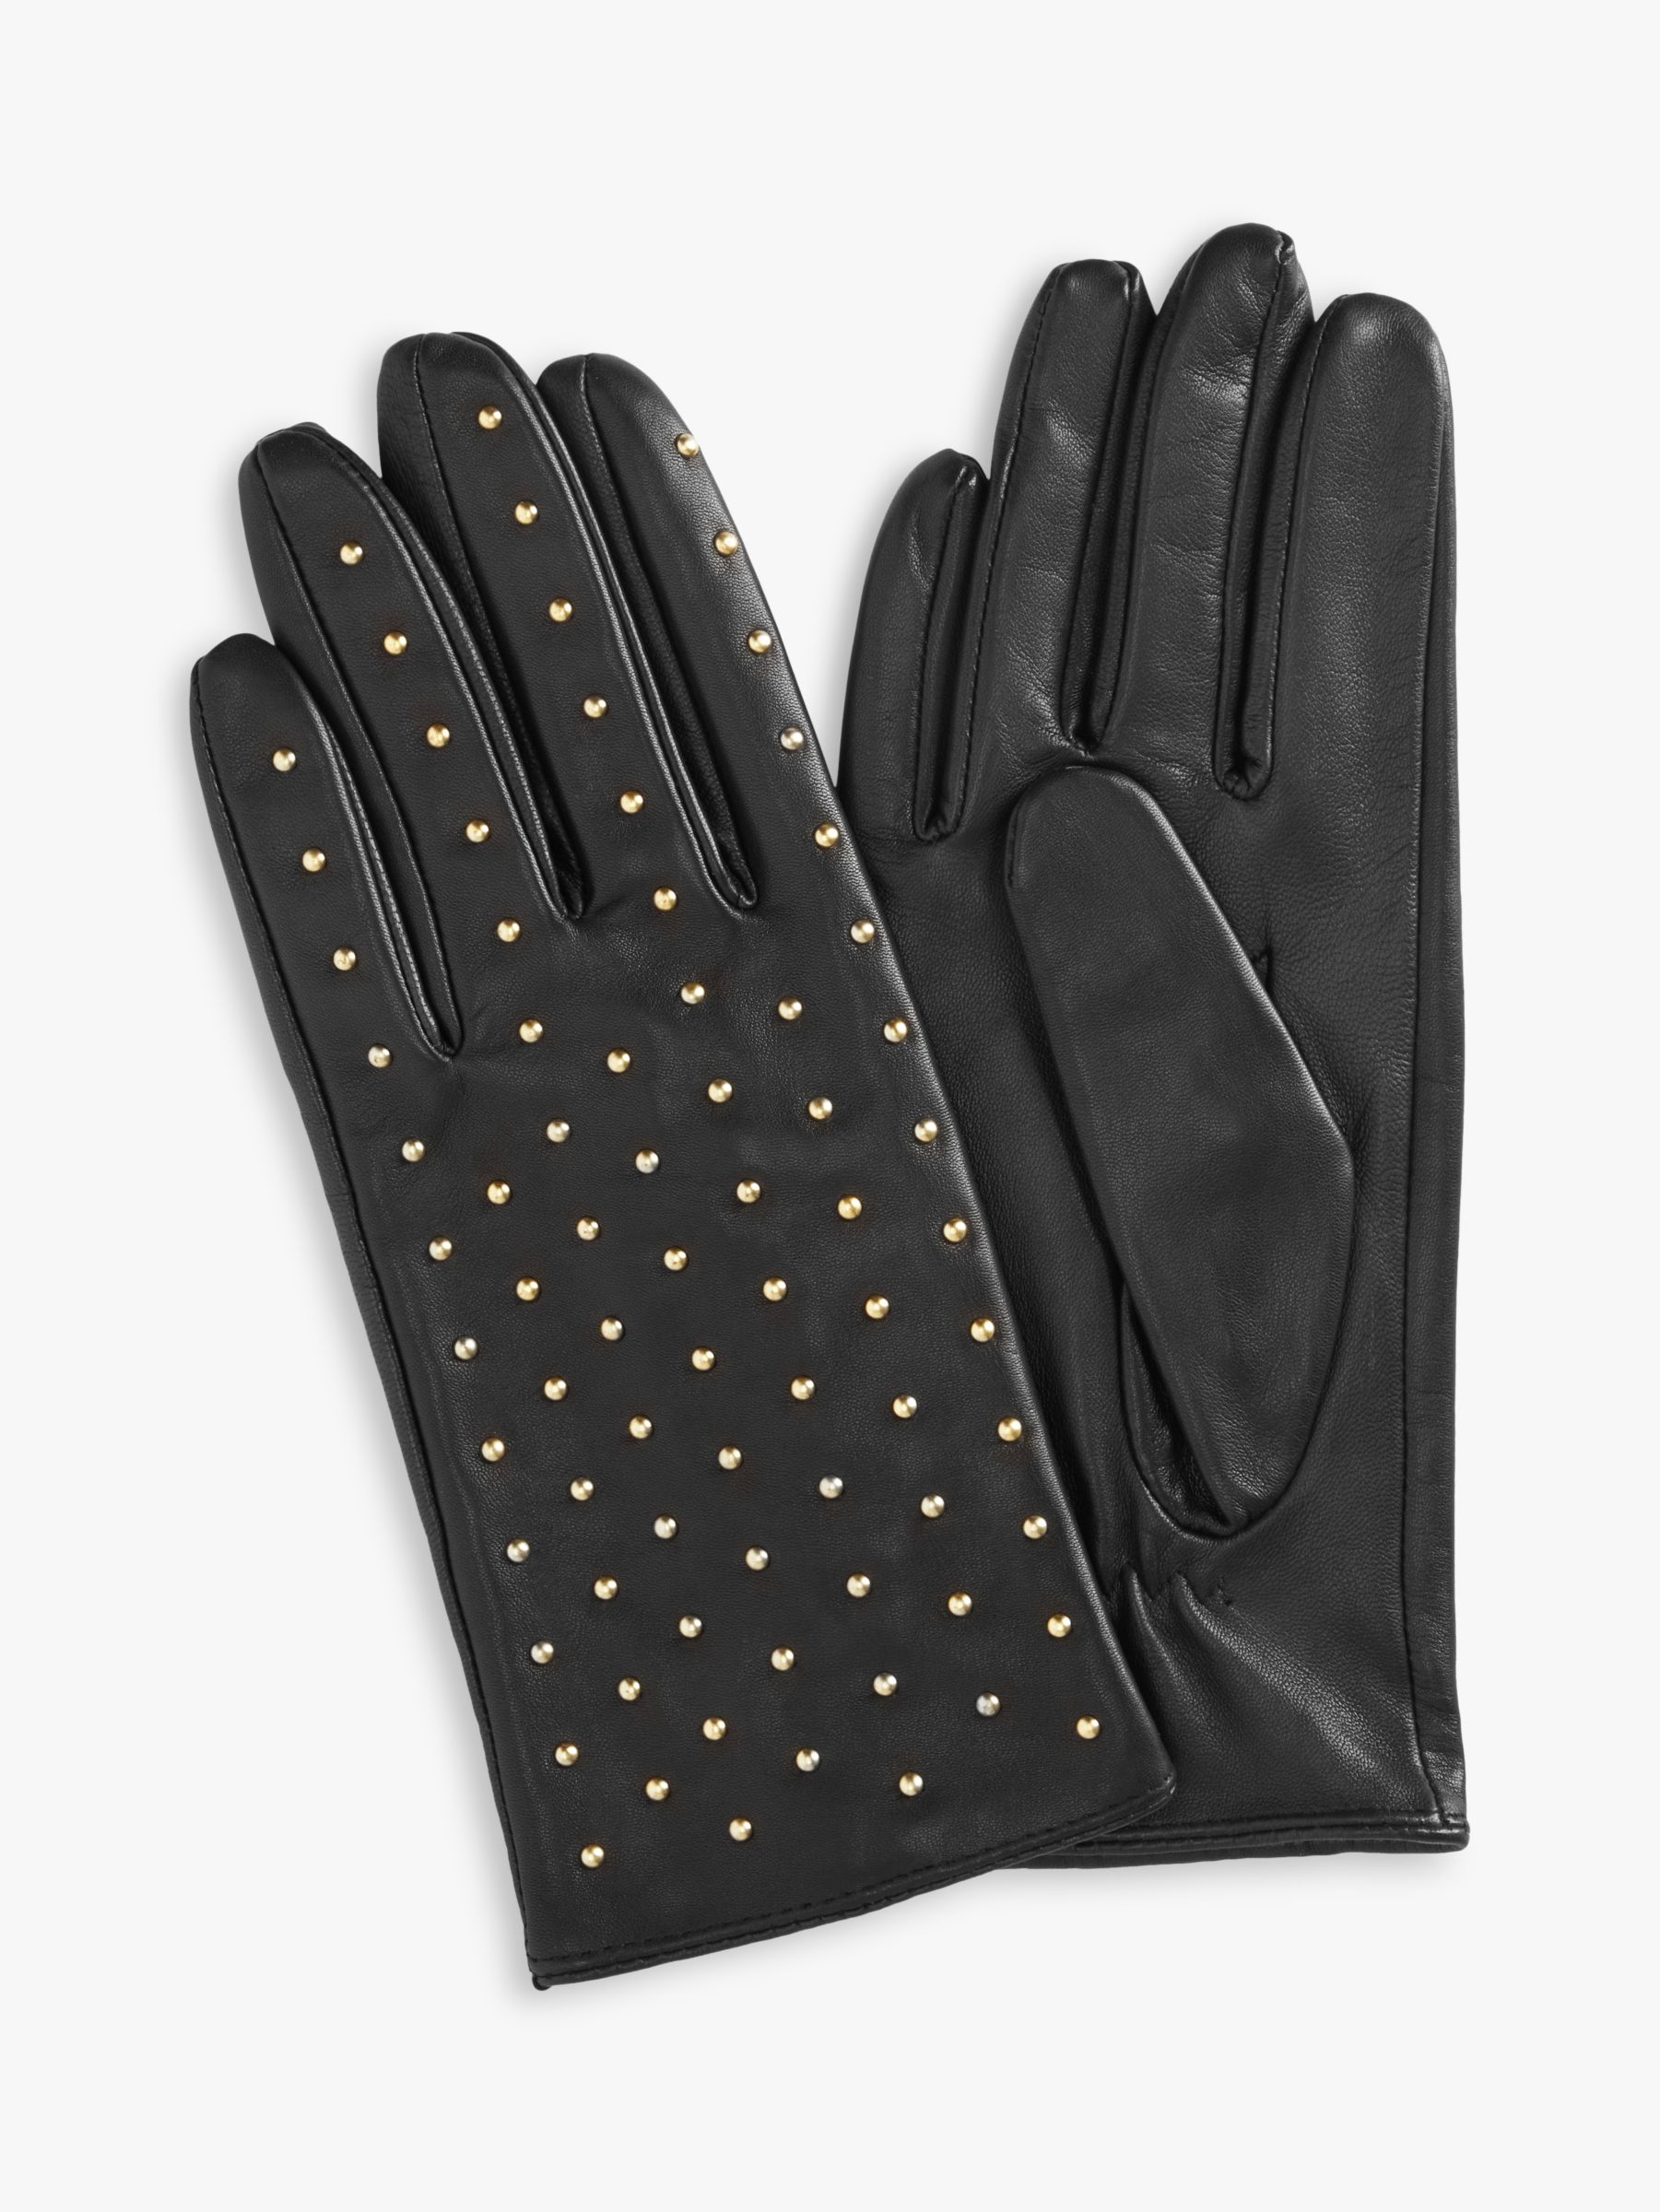 John Lewis Studded Leather Gloves, Black/Gold, S